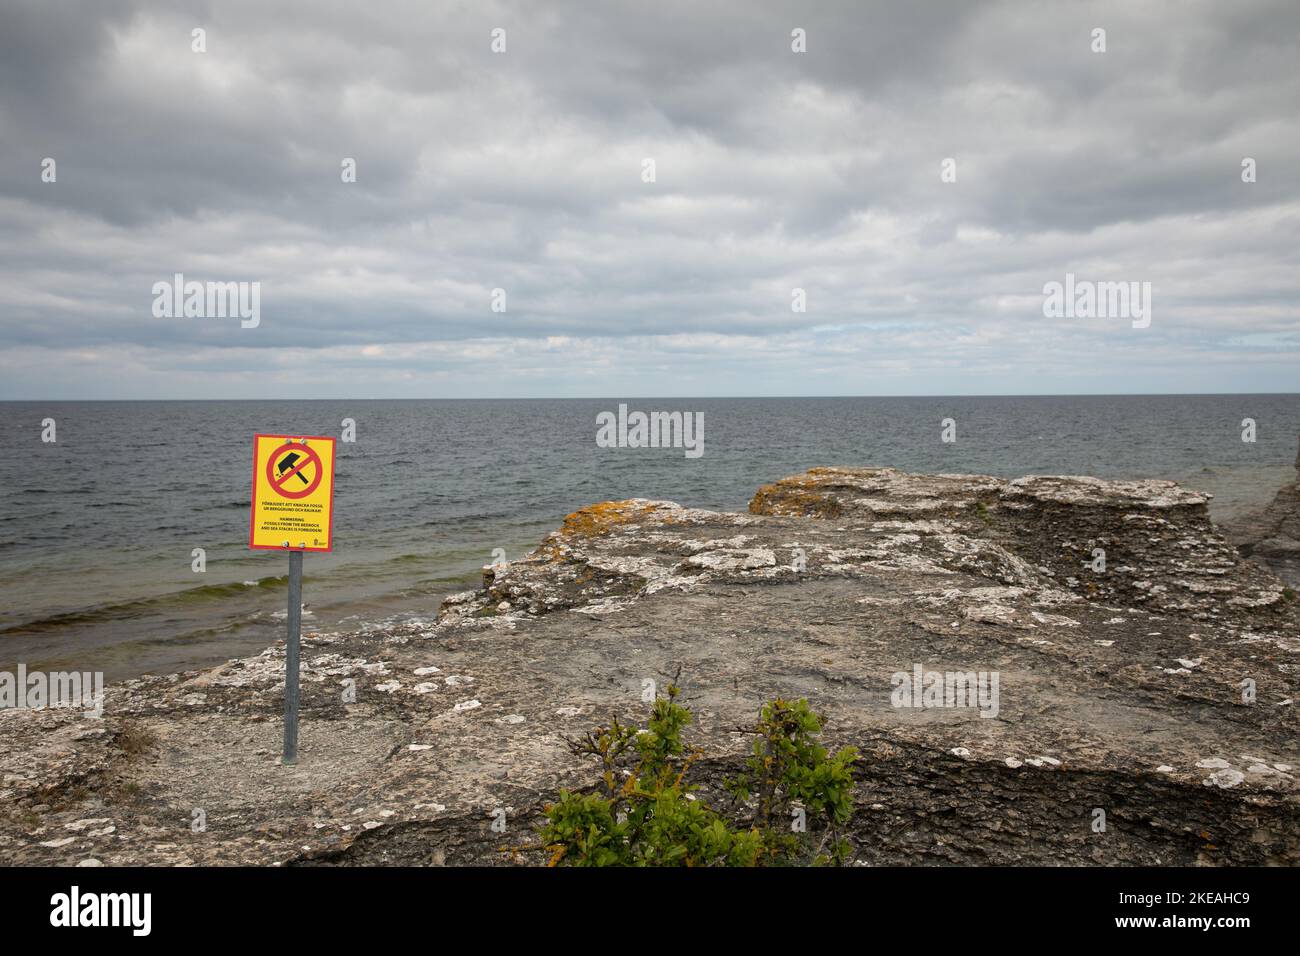 Byrums Raukar at the western coast, sign: hammering of fossils is forbidden, Sweden, Oeland, Boeda Stock Photo